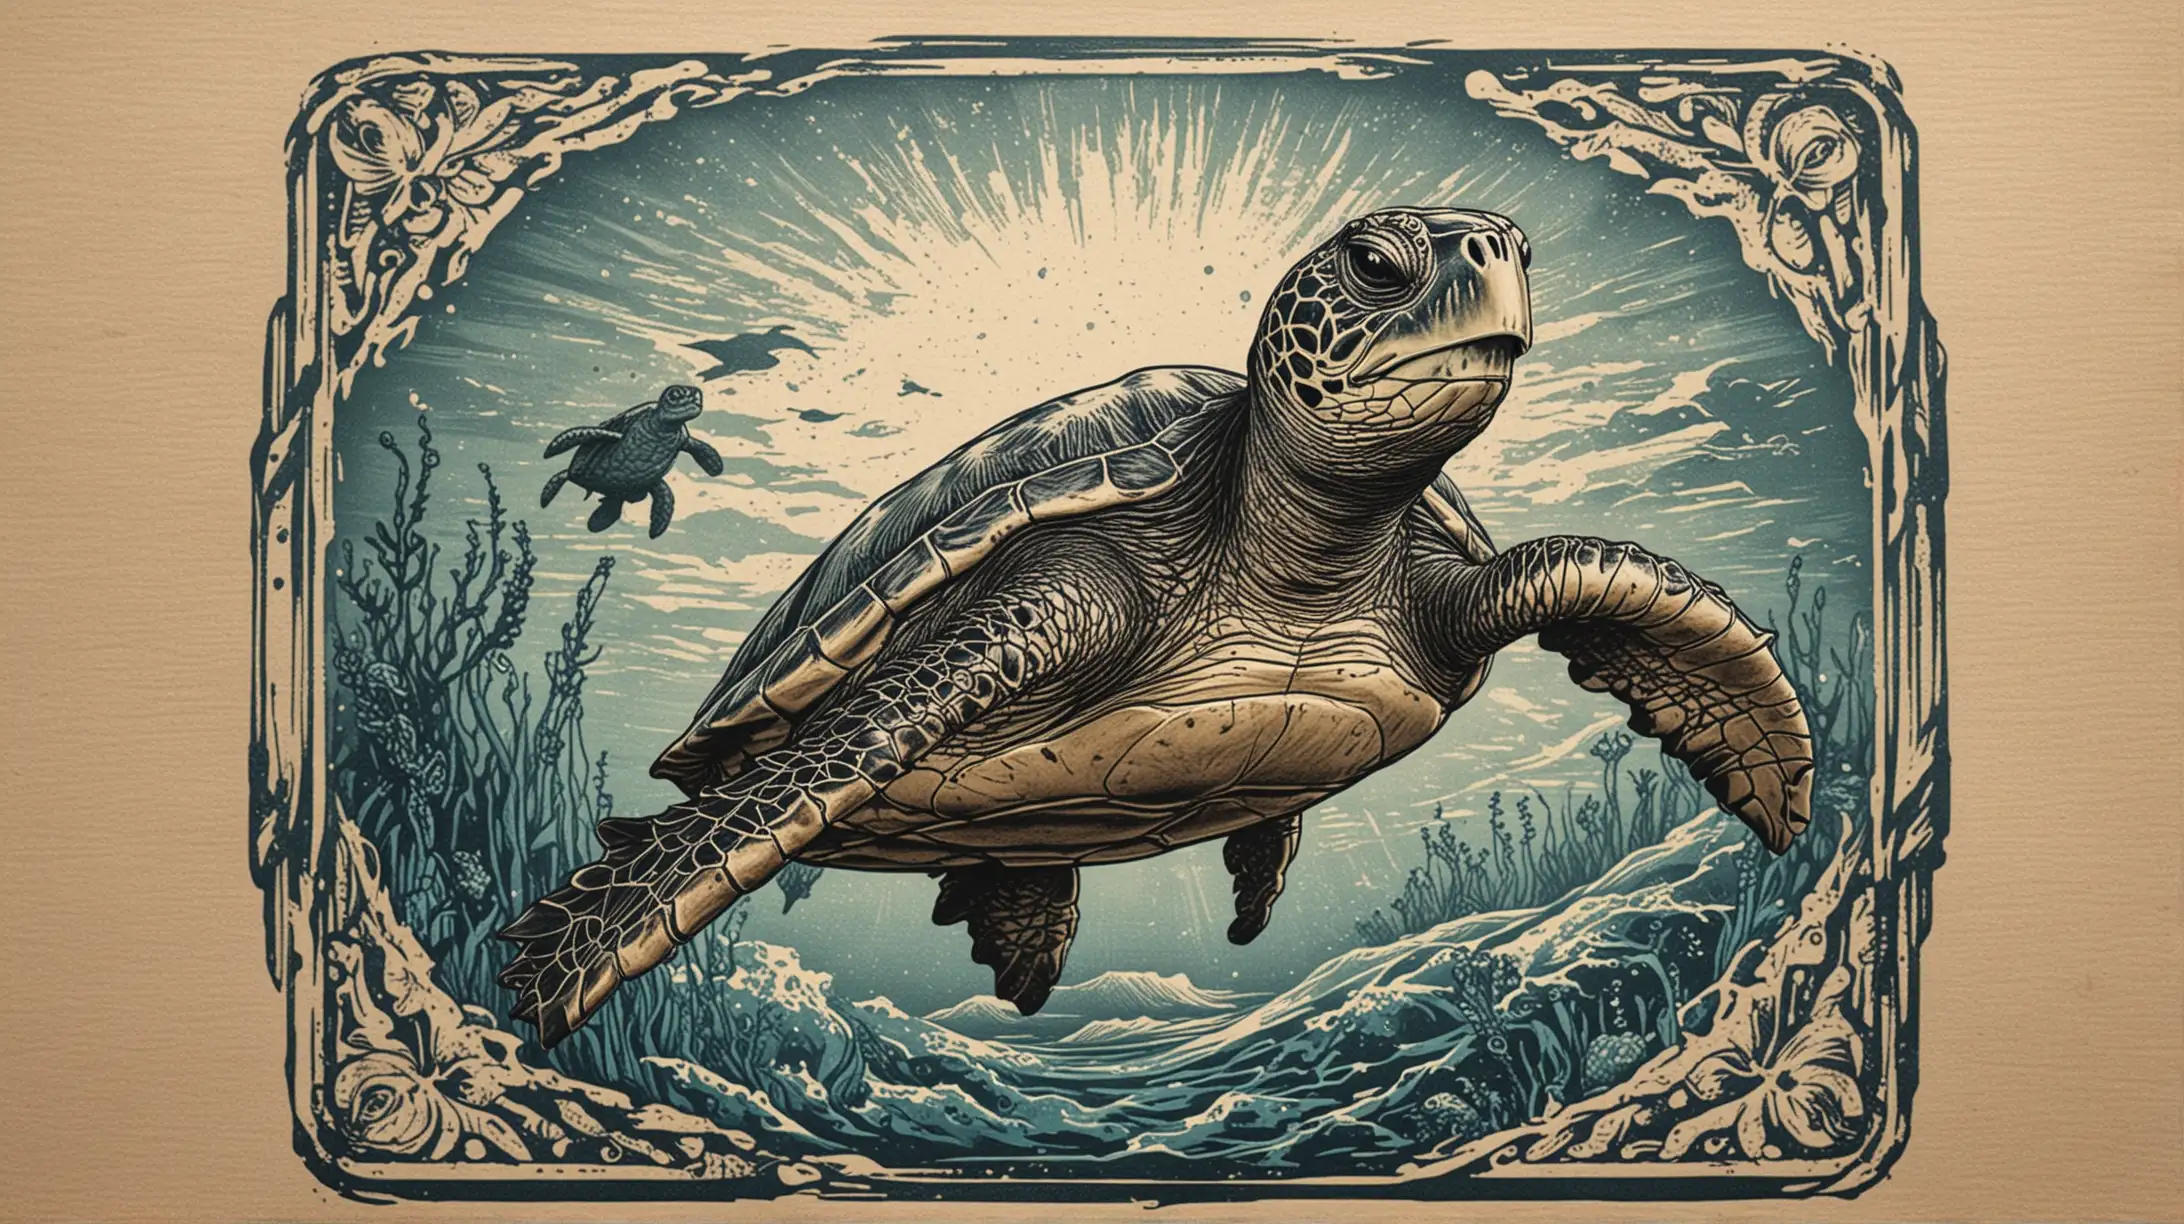 Detailed Block Print logo of a Lifelike Sea Turtle
very realistic block print Sea Turtle